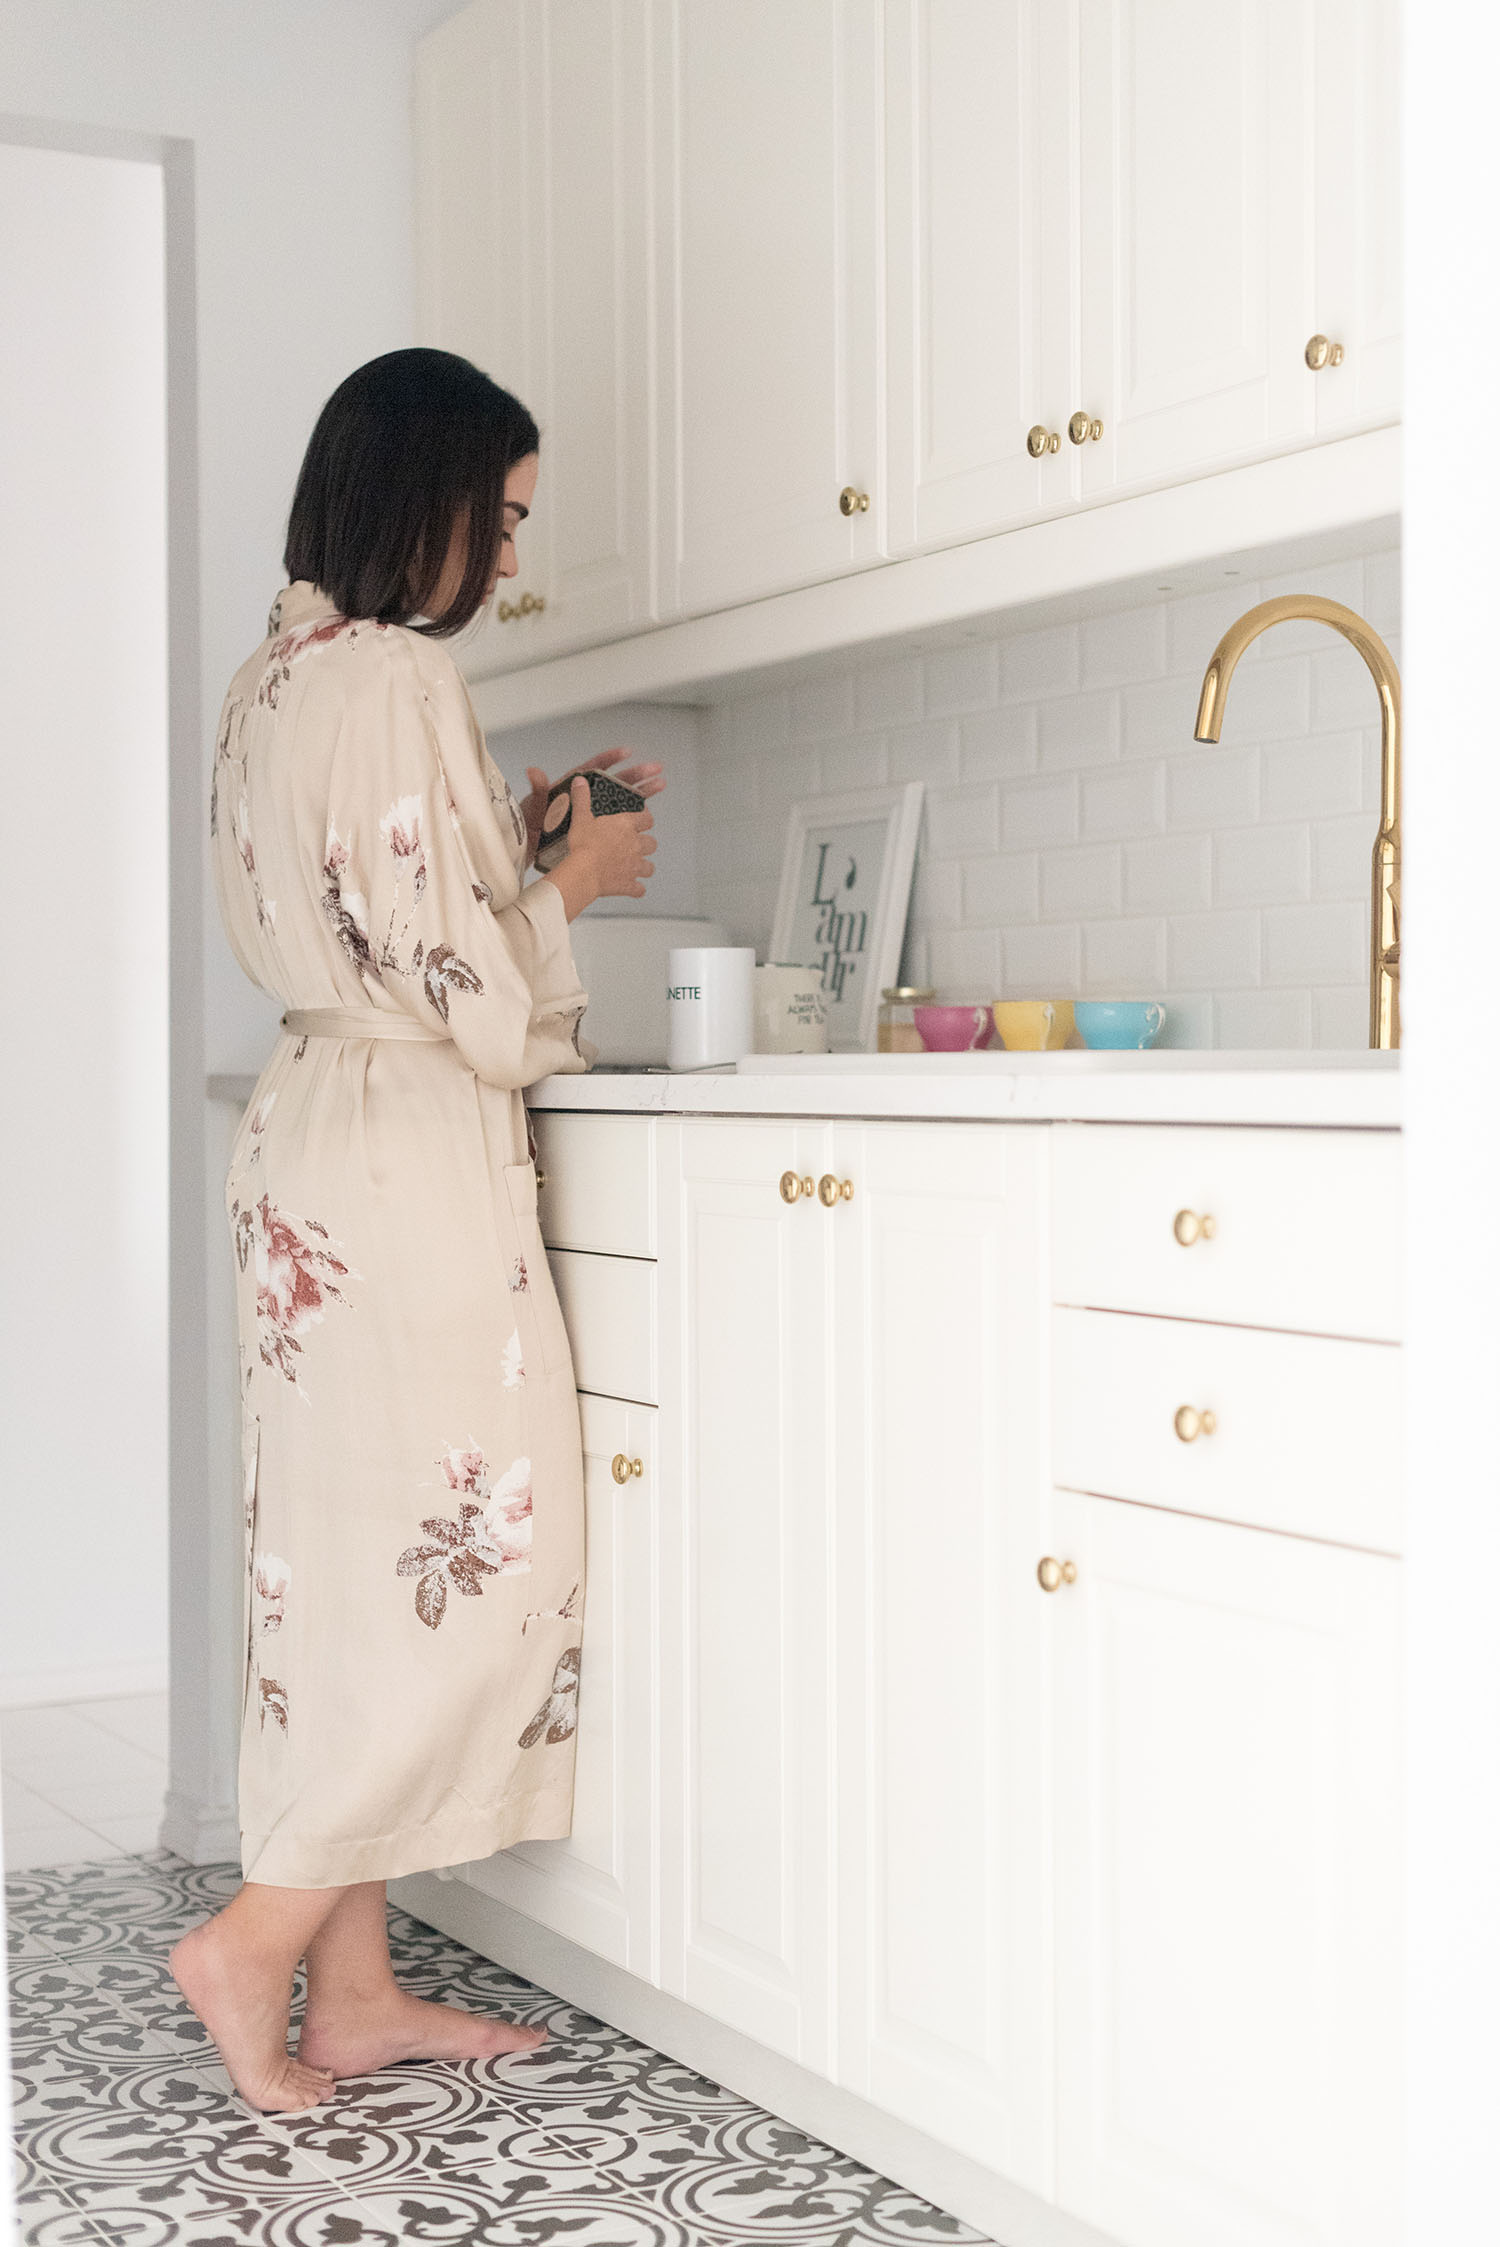 Top Winnipeg lifestyle blogger Cee Fardoe of Coco & Vera stands in her condo kitchen wearing an Aritzia kimono and pouring Sloane tea